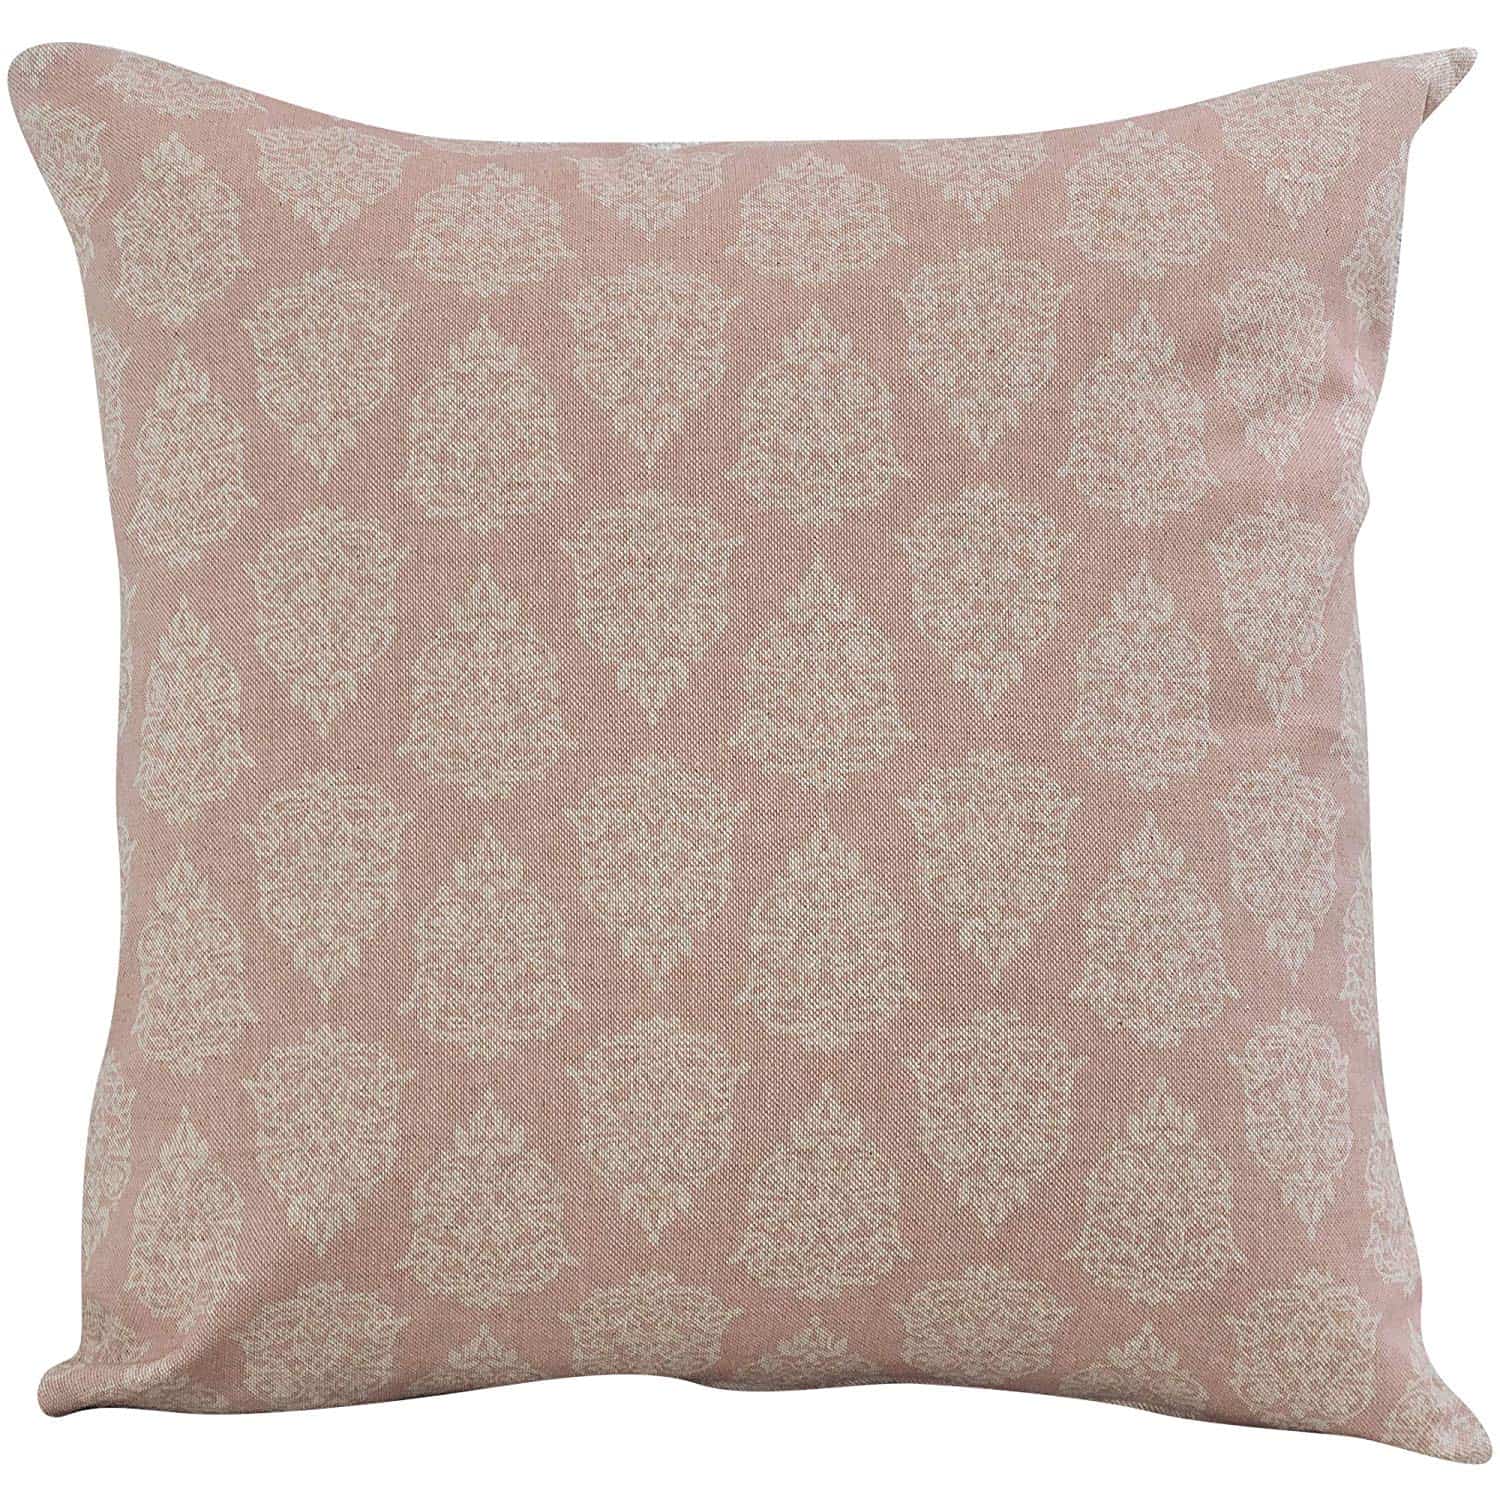 Vintage Paisley Cushion in Blush Pink - Linen Loft